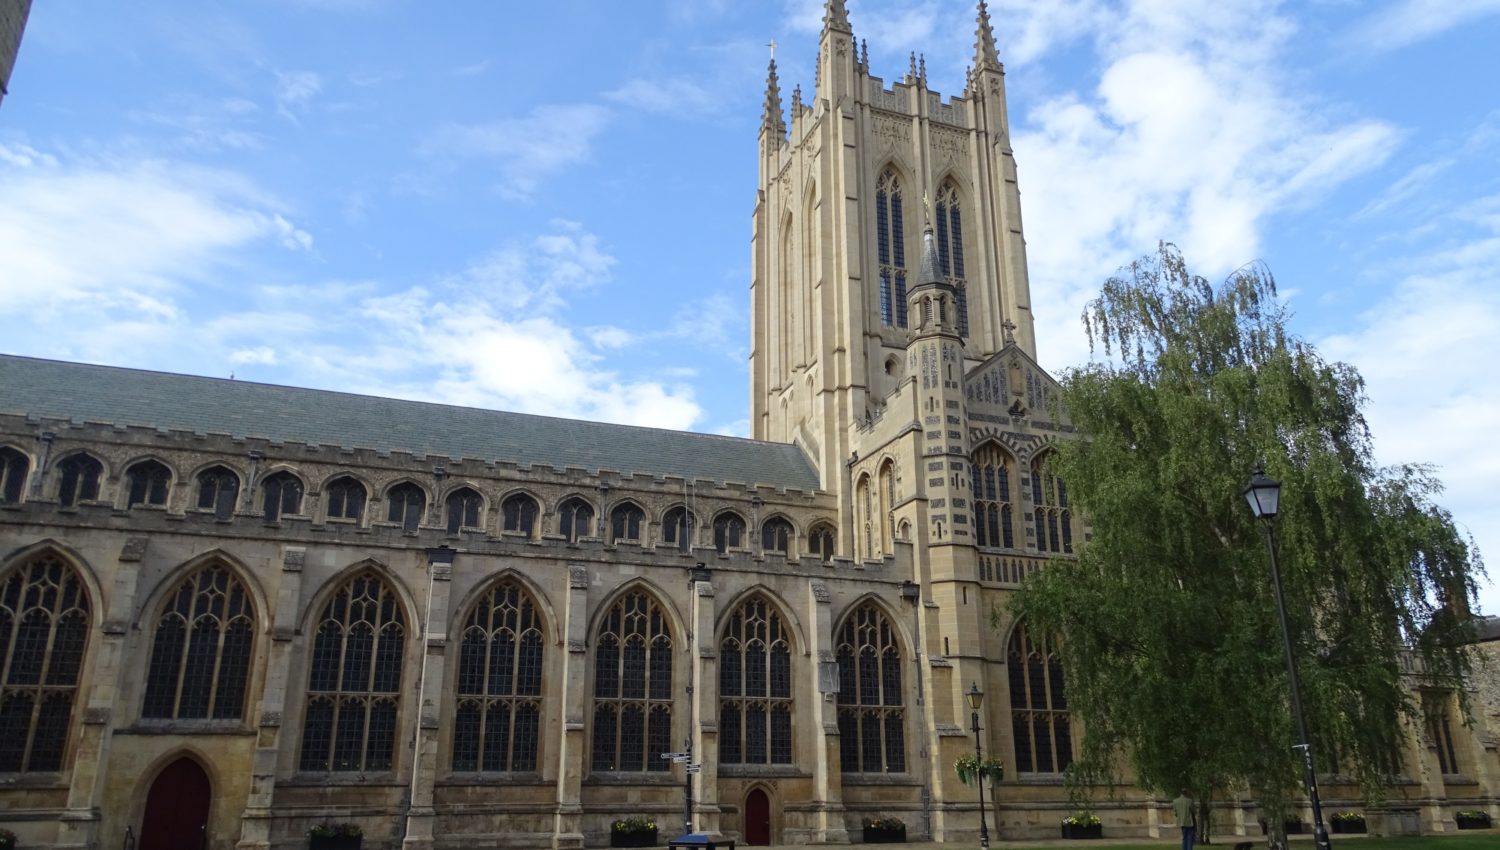 Kall Kwik to sponsor St Edmundsbury Cathedral’s carol service – A Festival of Lights